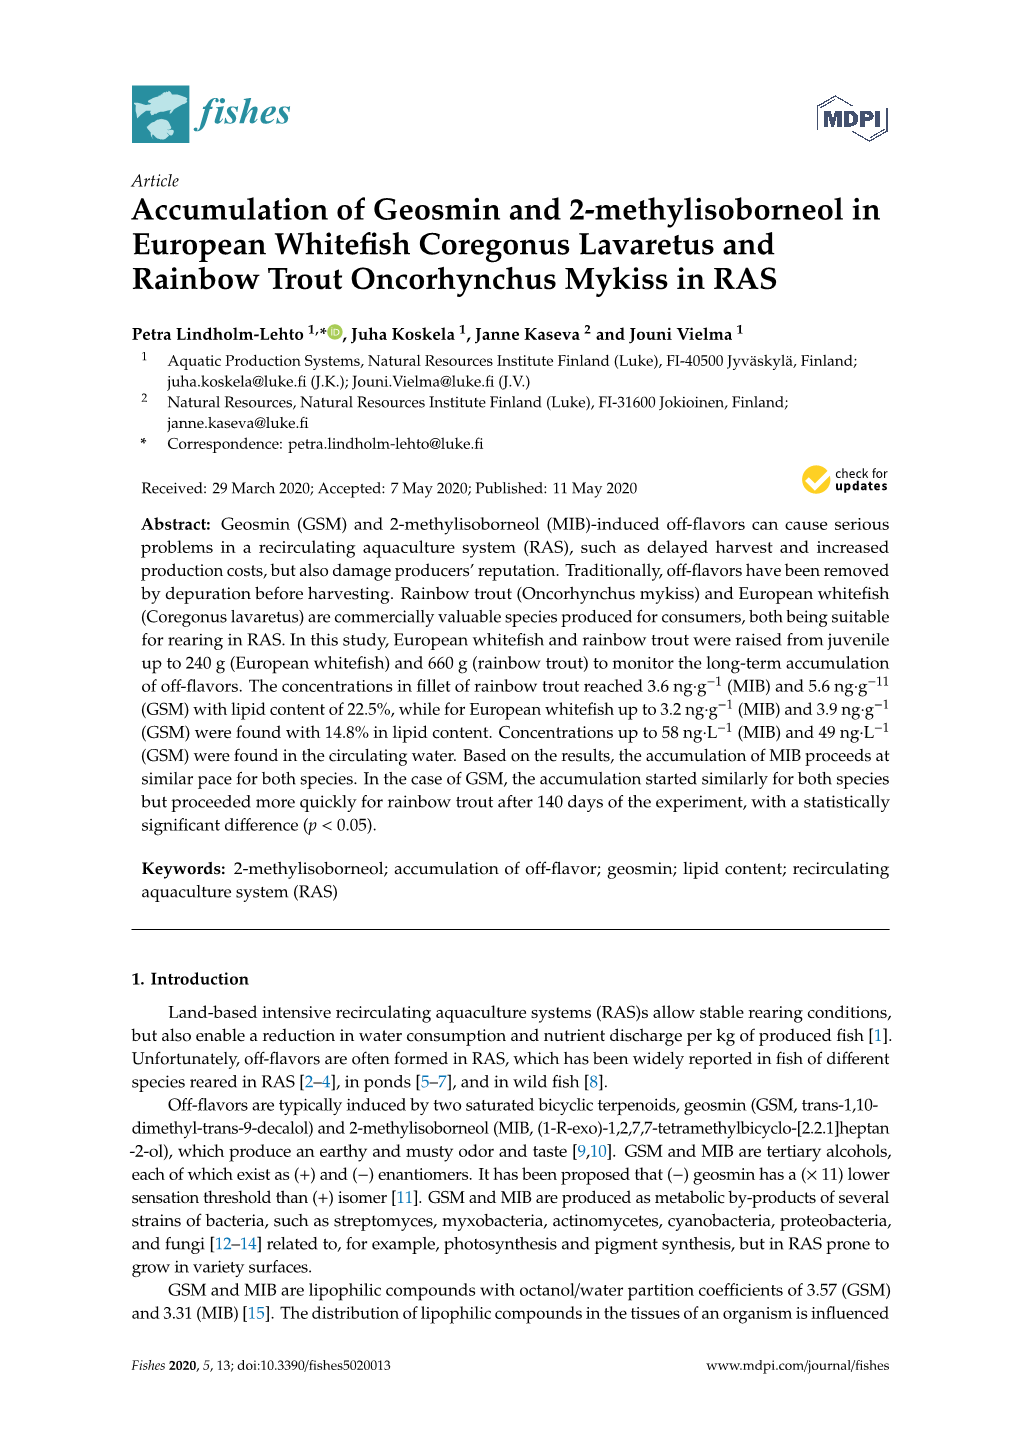 Accumulation of Geosmin and 2-Methylisoborneol in European Whiteﬁsh Coregonus Lavaretus and Rainbow Trout Oncorhynchus Mykiss in RAS